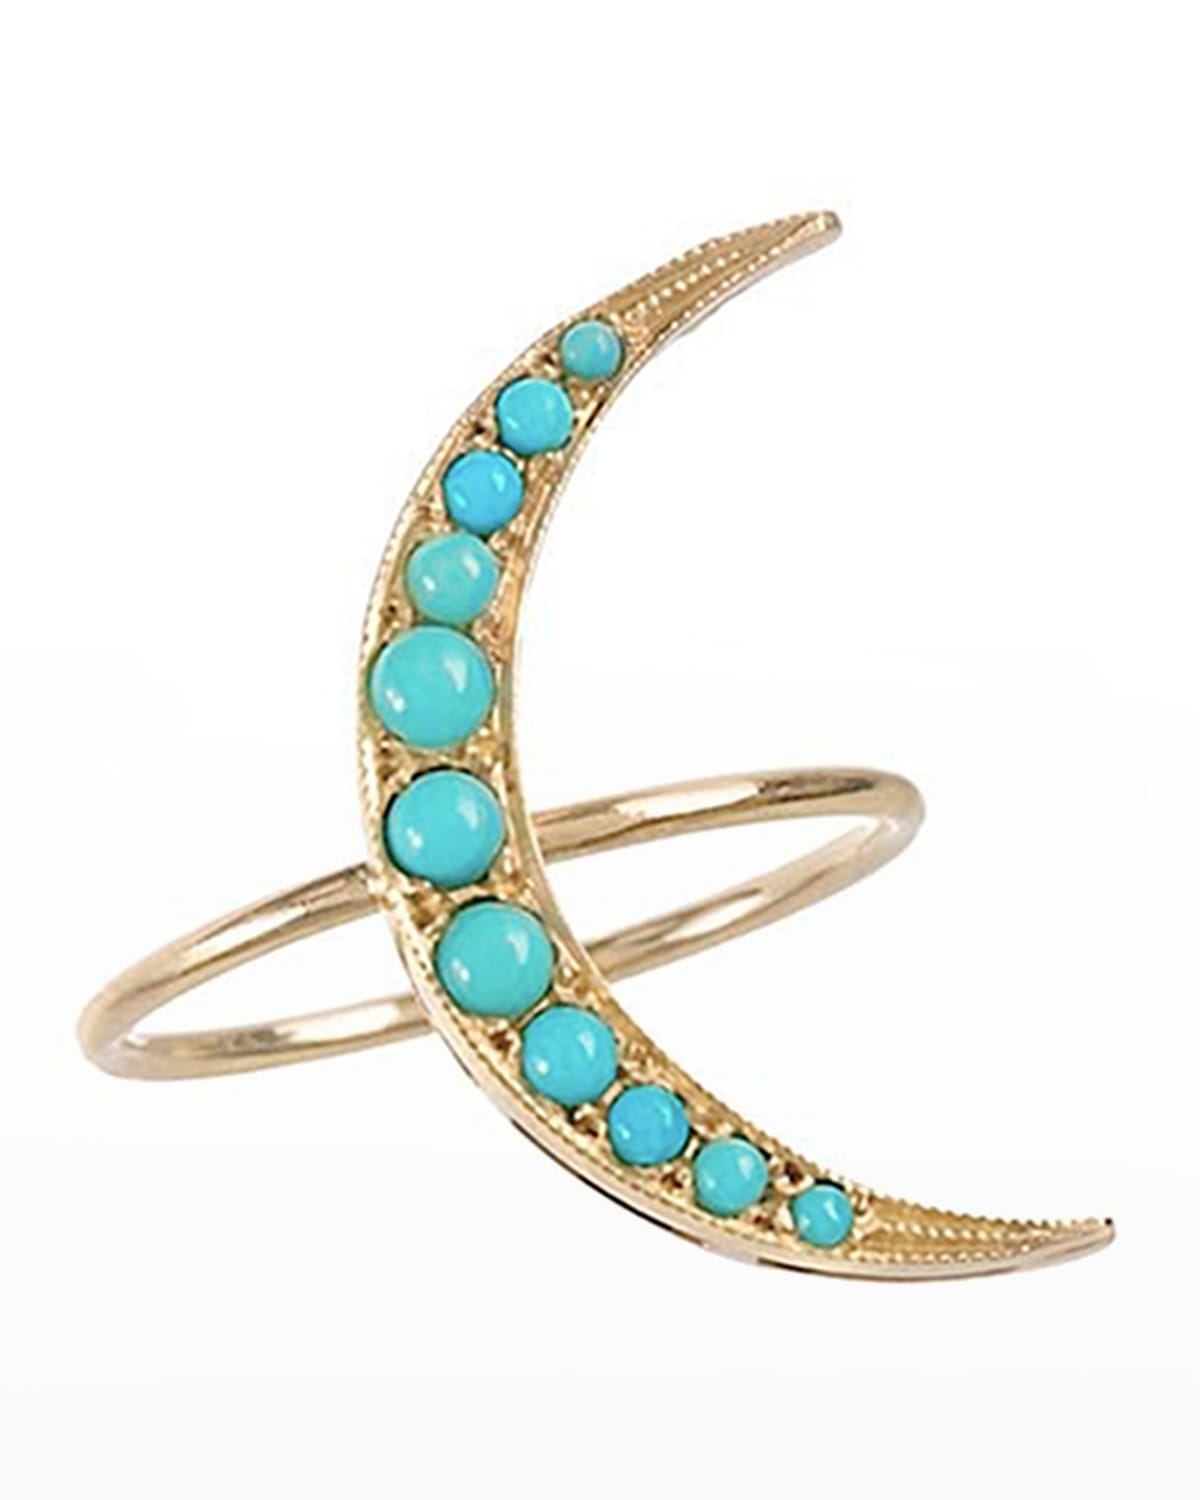 Andrea Fohrman Medium Turquoise Luna Ring, Size 7